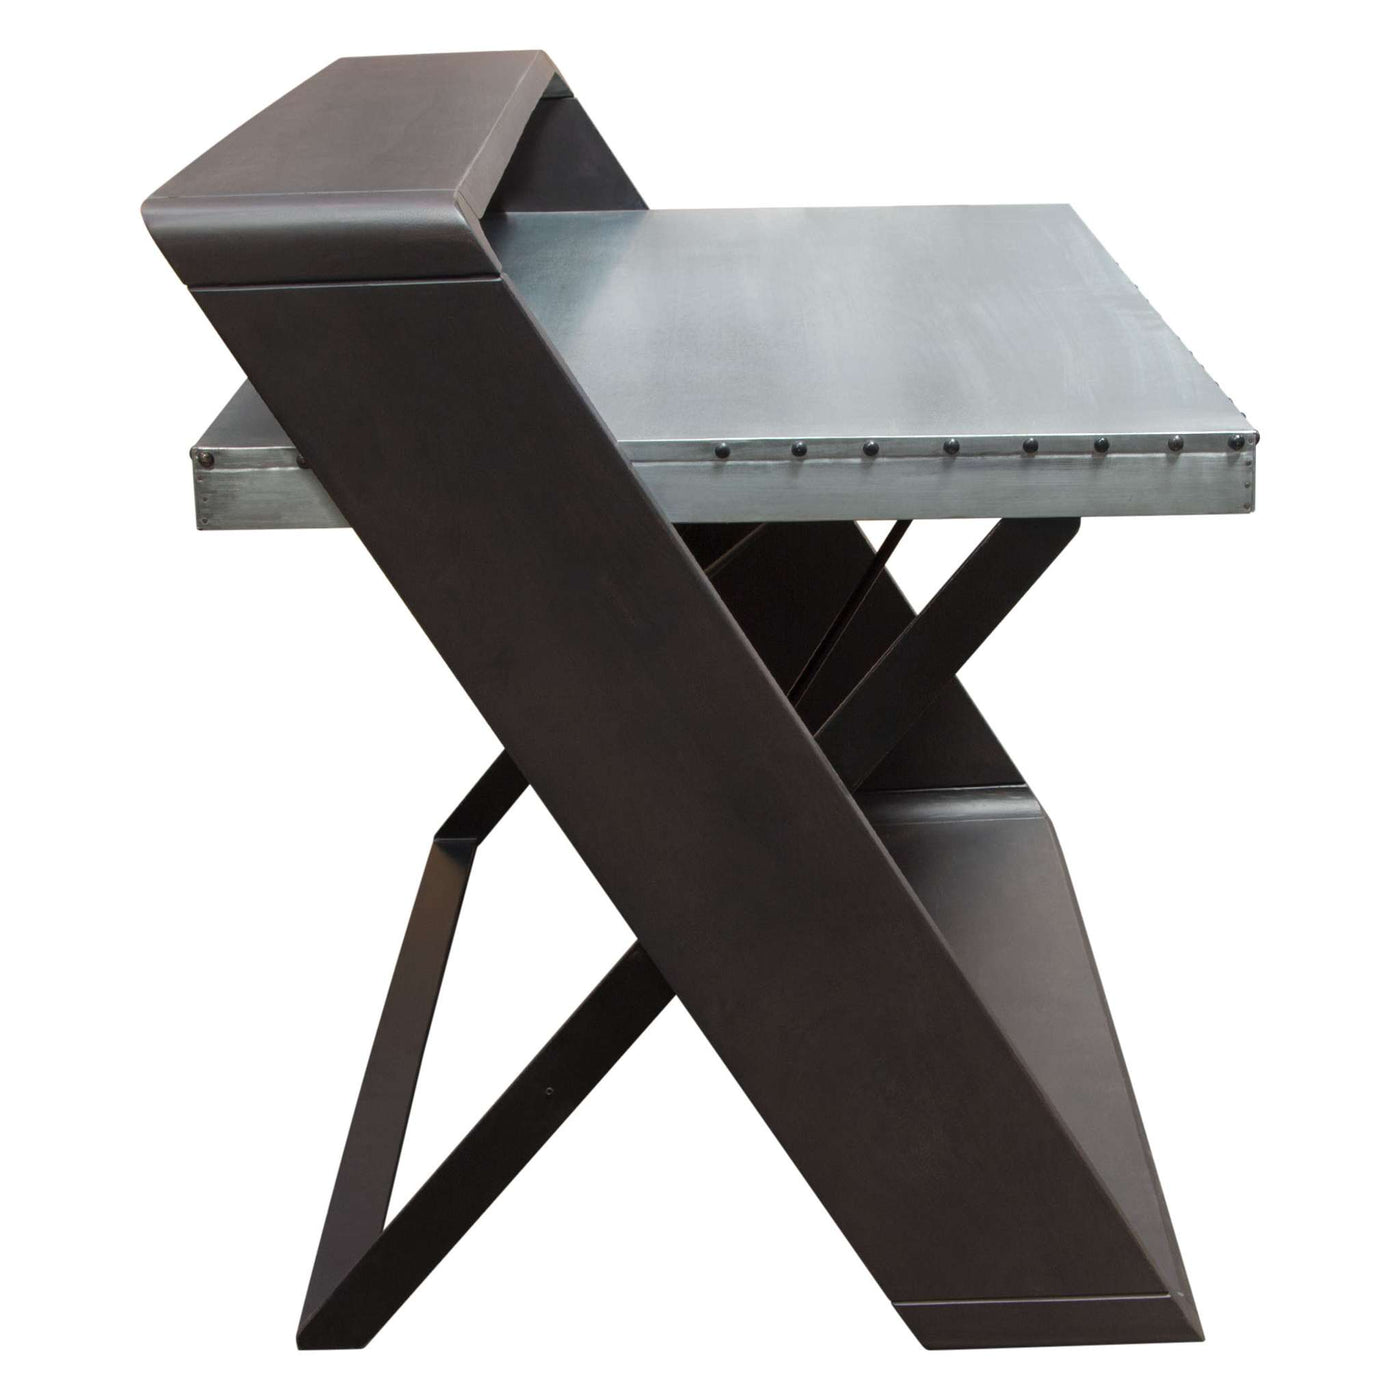 Barclay Zinc Top Writing Desk w/ Mango Wood & Iron Base by Diamond Sofa